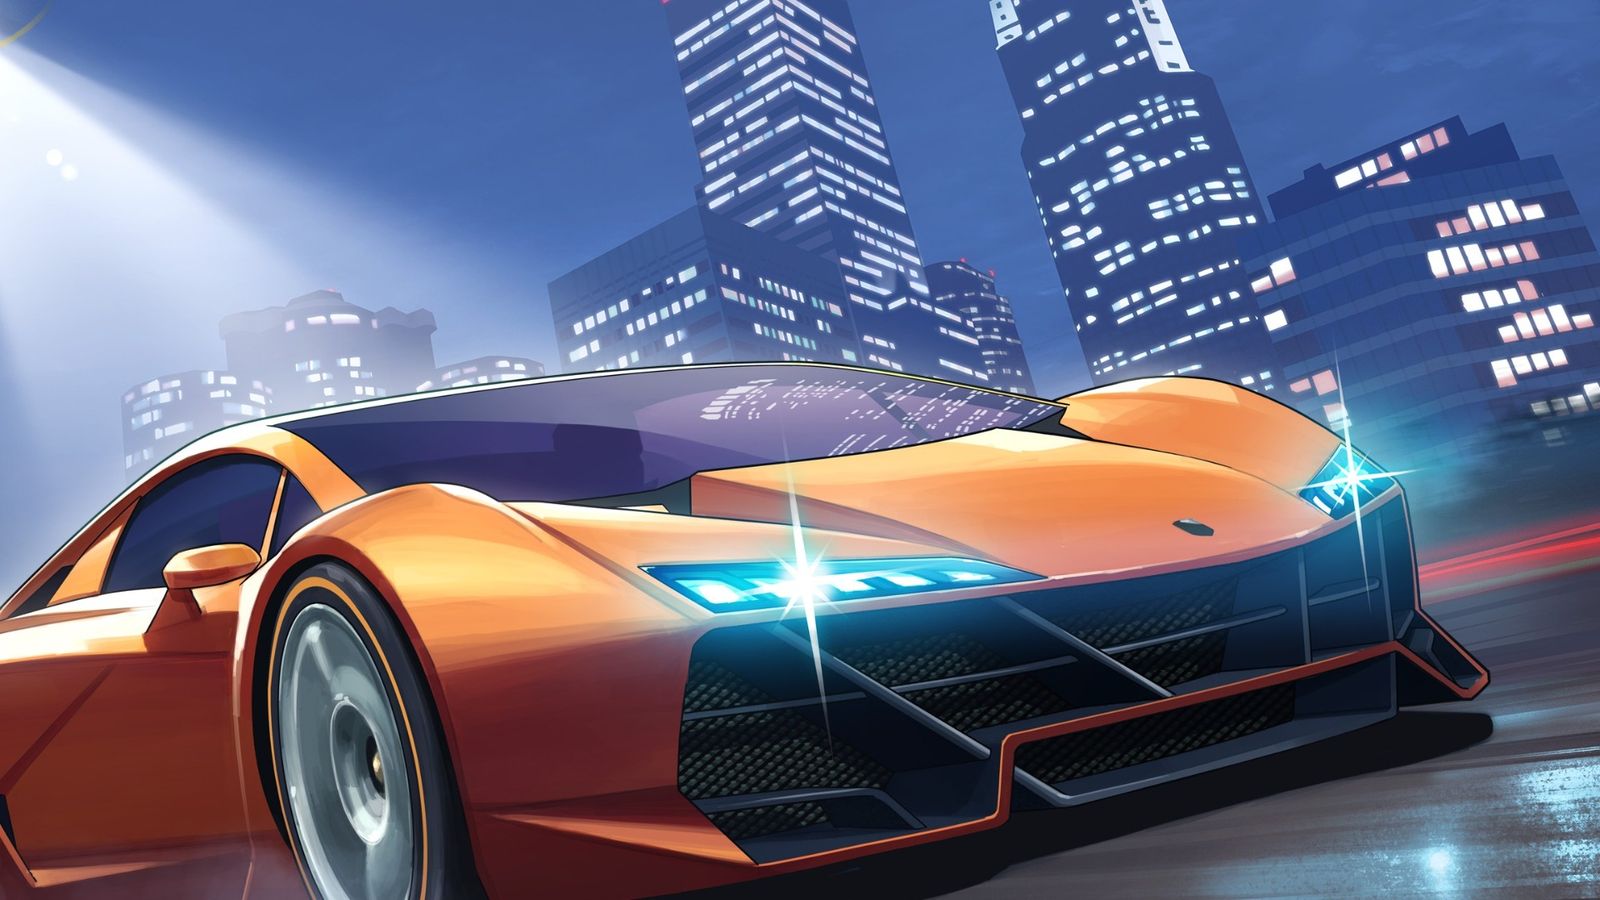 GTA Online The High Life Car artwork. The image shows a high-end orange sports car. 